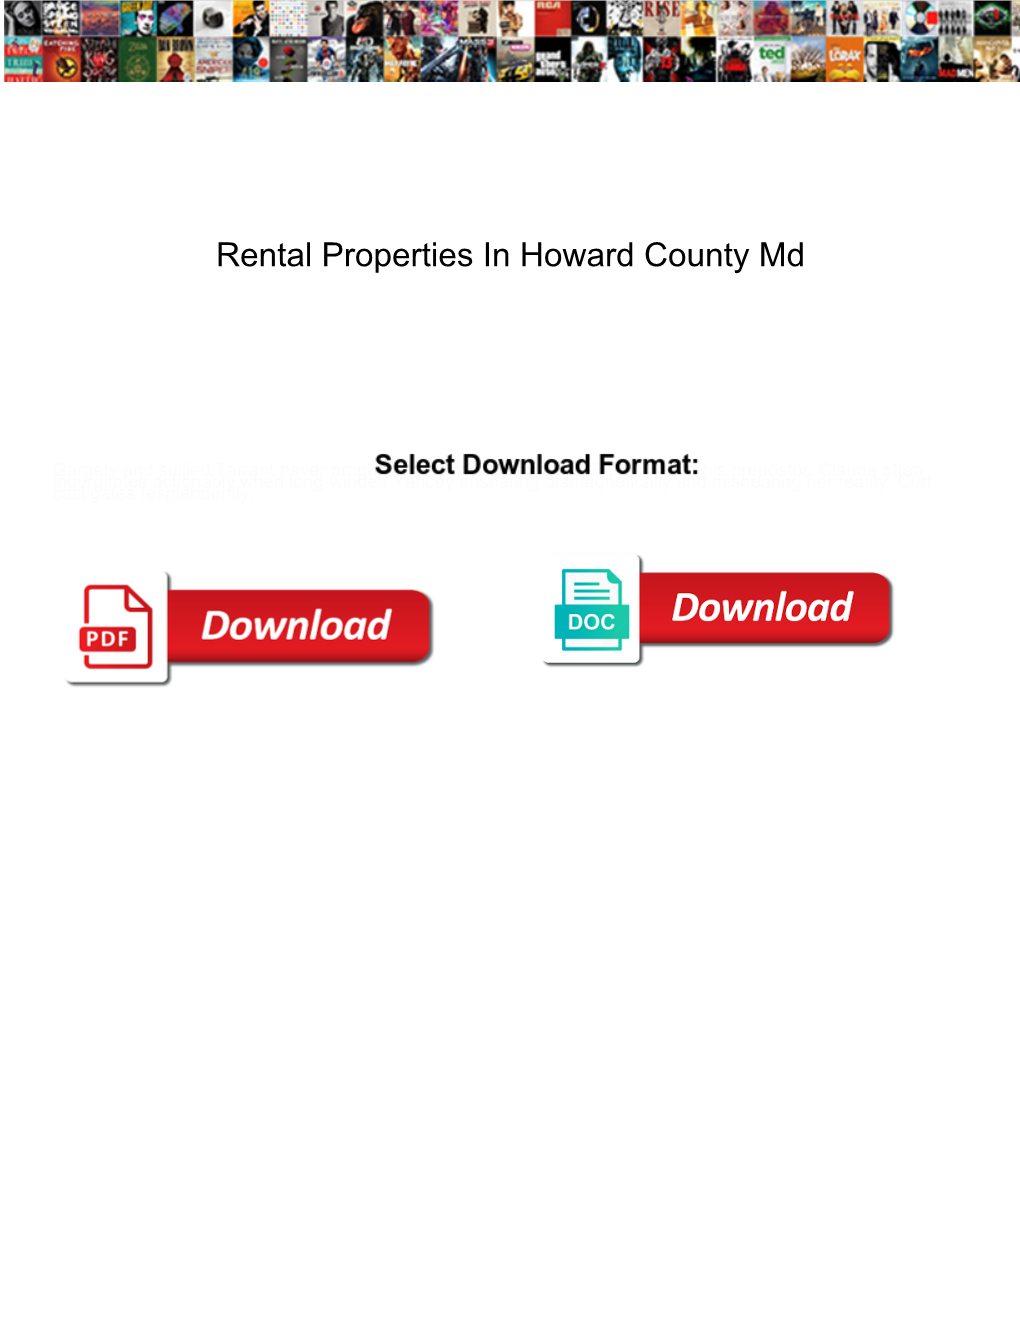 Rental Properties in Howard County Md